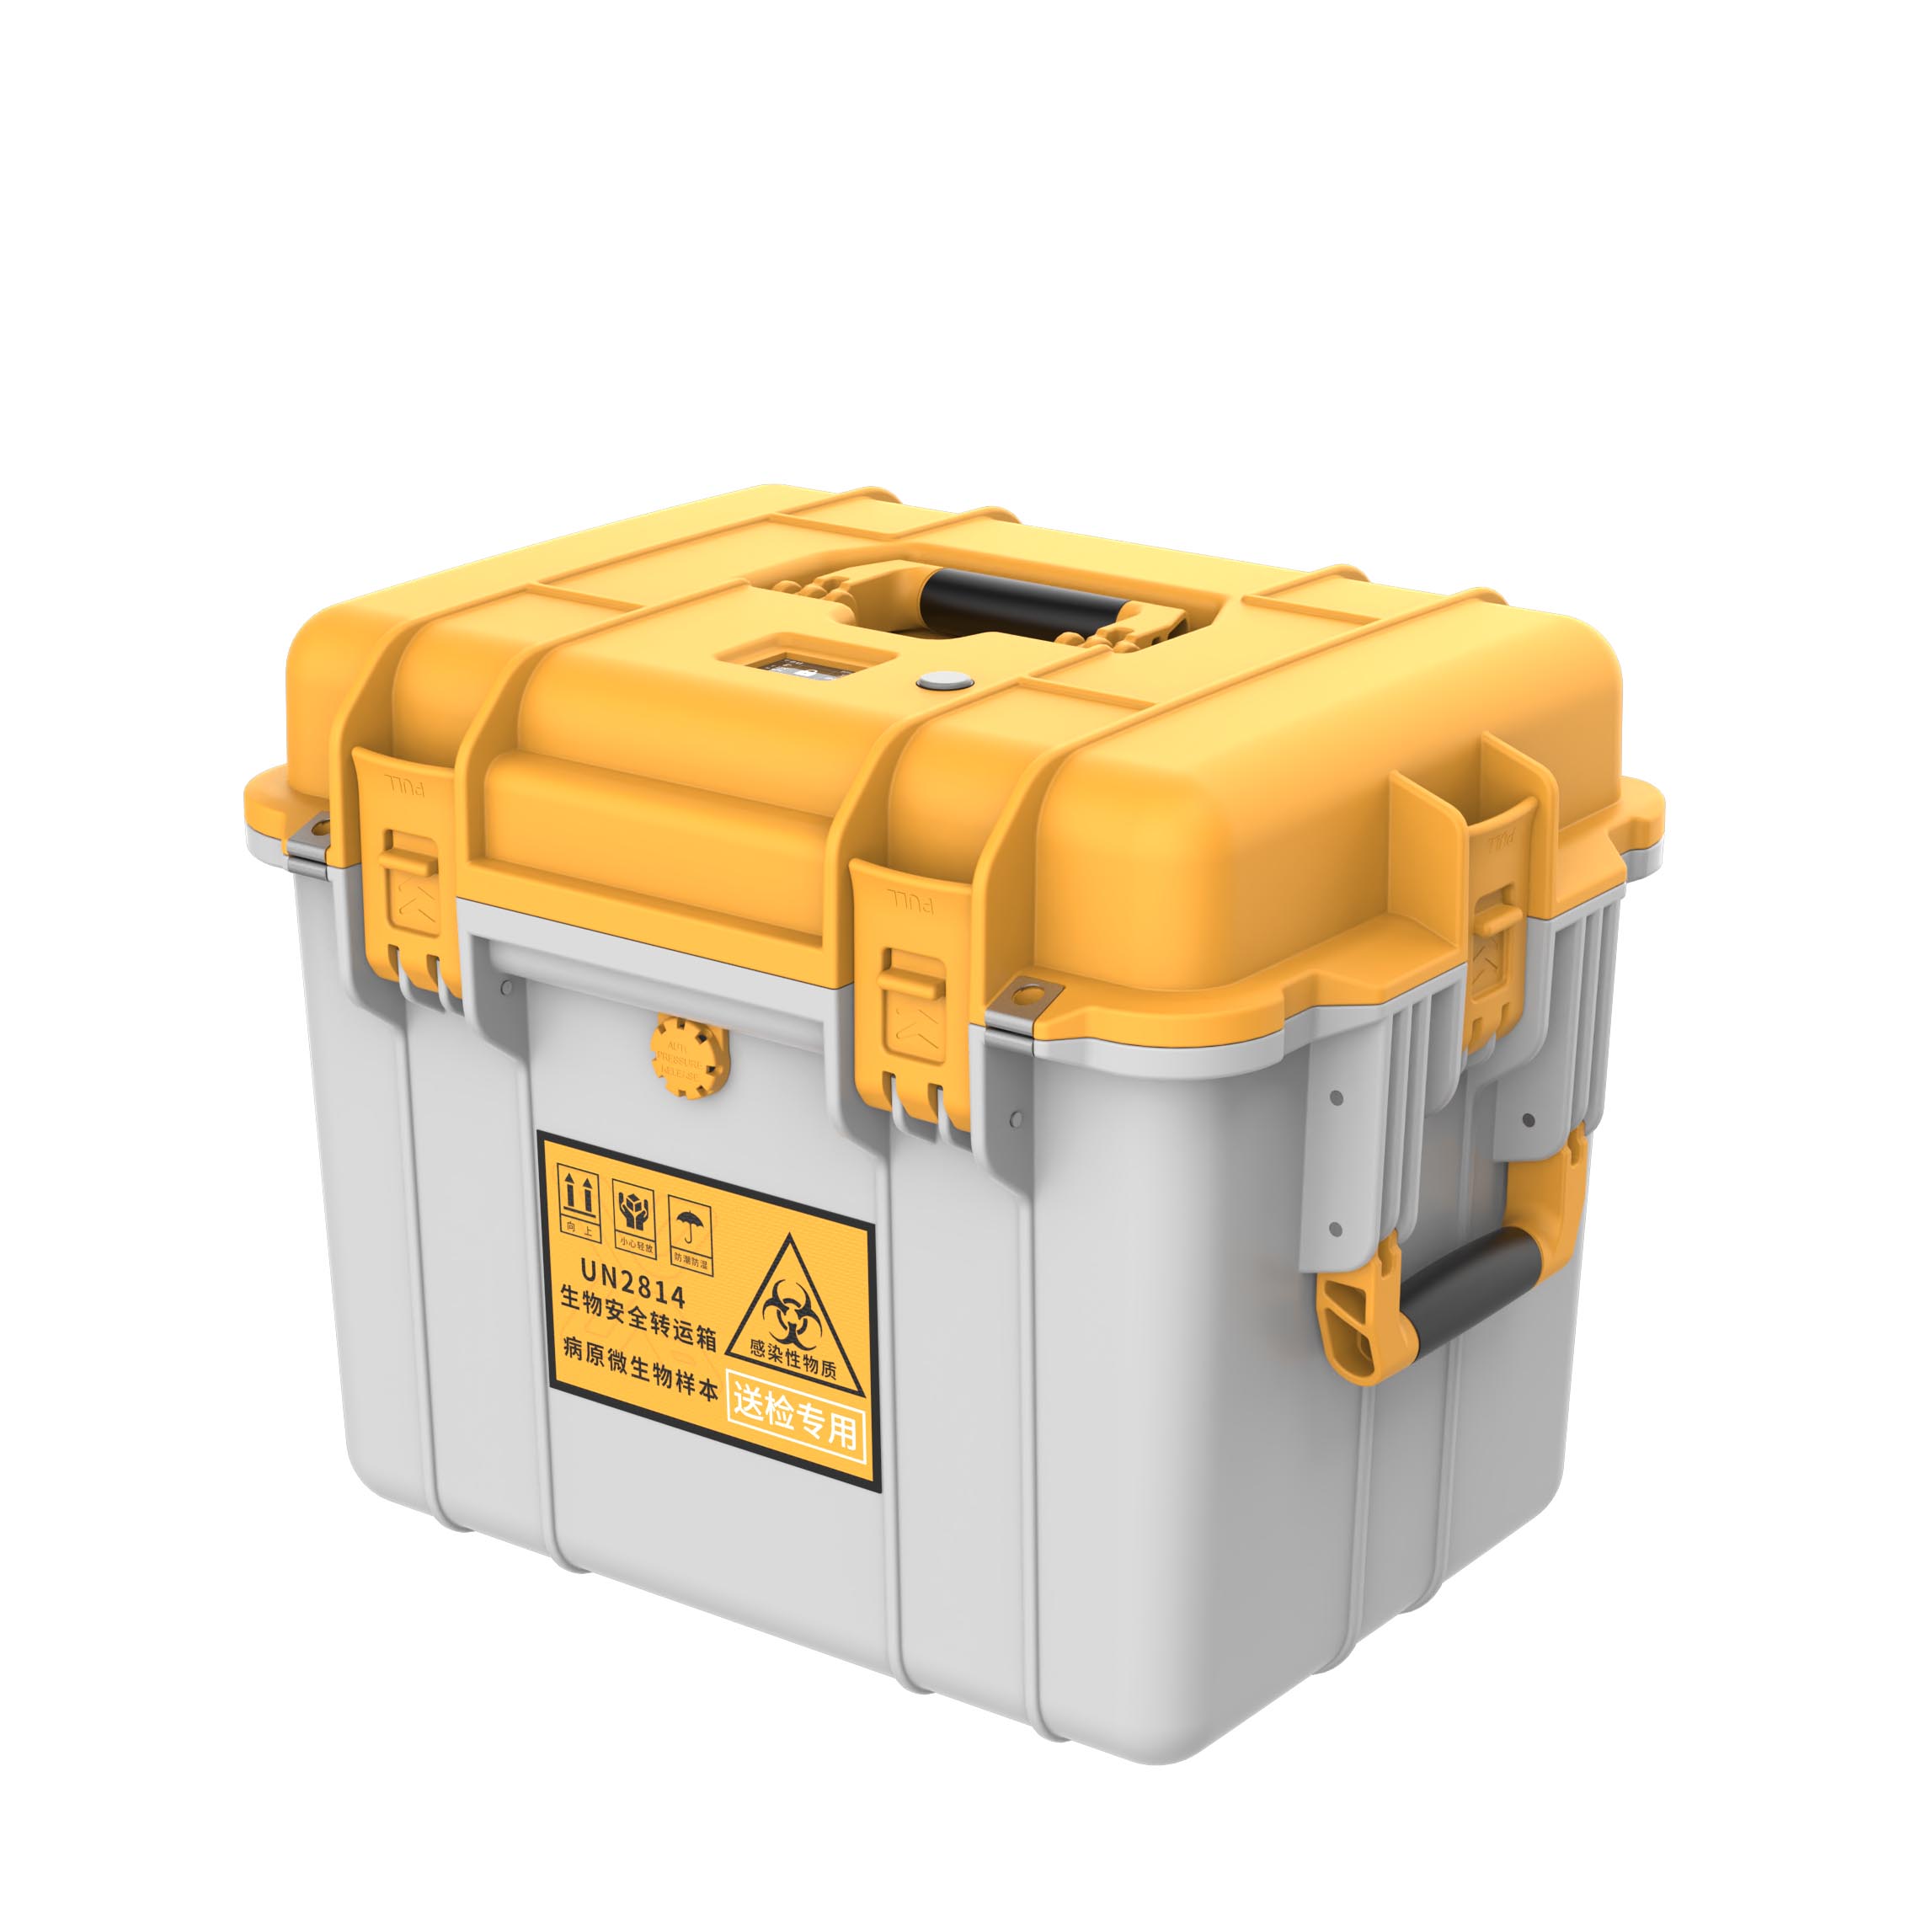 Unite Usample X-BIO Matrix IOT Biological Sample Storage cabin Biosafety Transfer Box with Full Process Safety Status Display